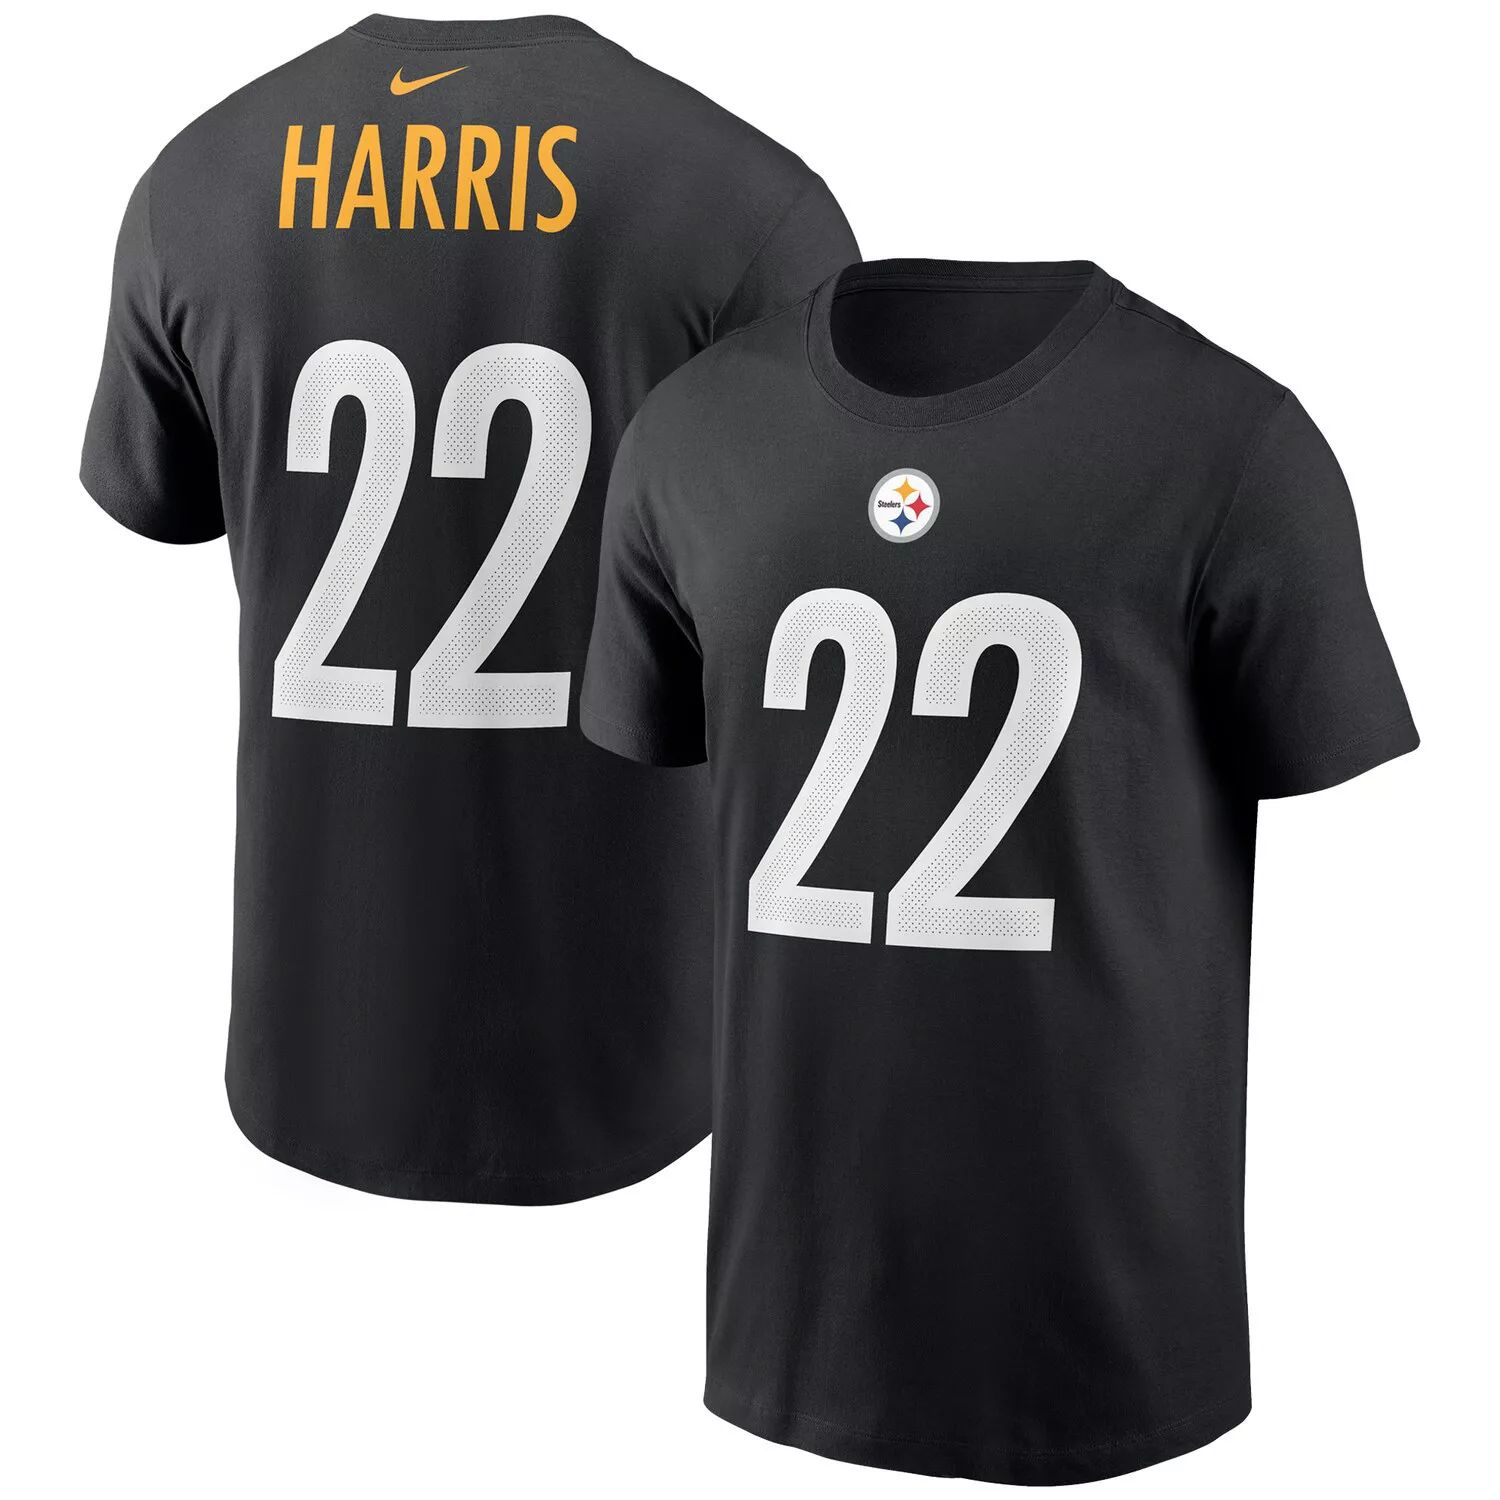 Мужская черная футболка Najee Harris Pittsburgh Steelers с именем и номером игрока Nike